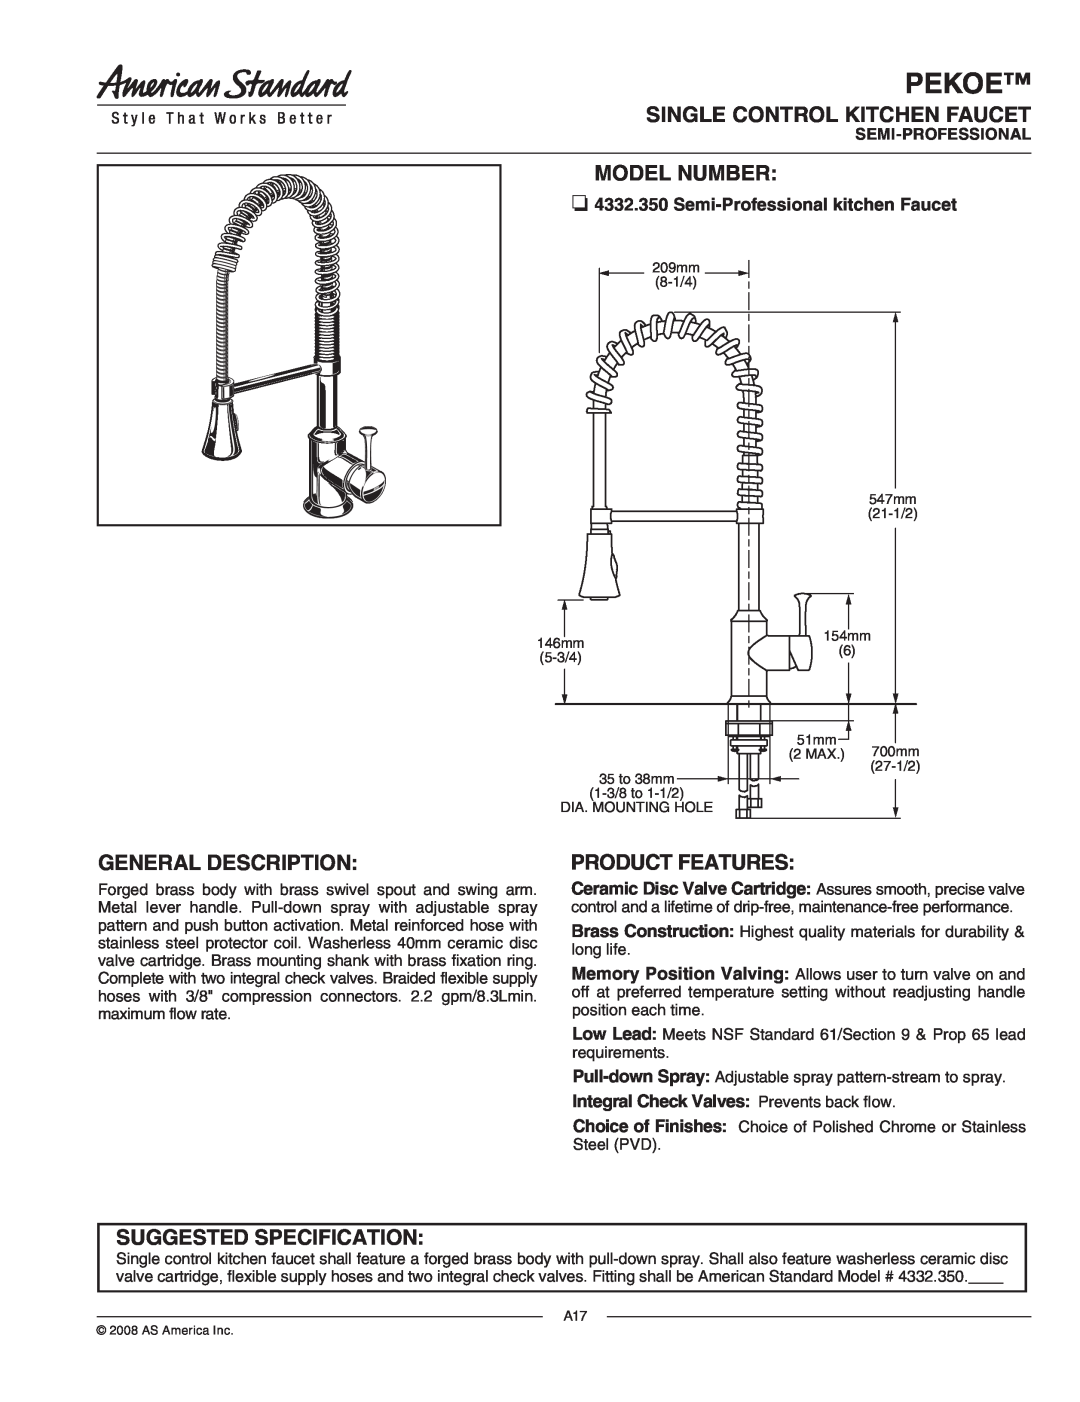 American Standard 4332.350 specifications Pekoe, Semi-Professionalkitchen Faucet, Integral Check Valves Prevents back flow 